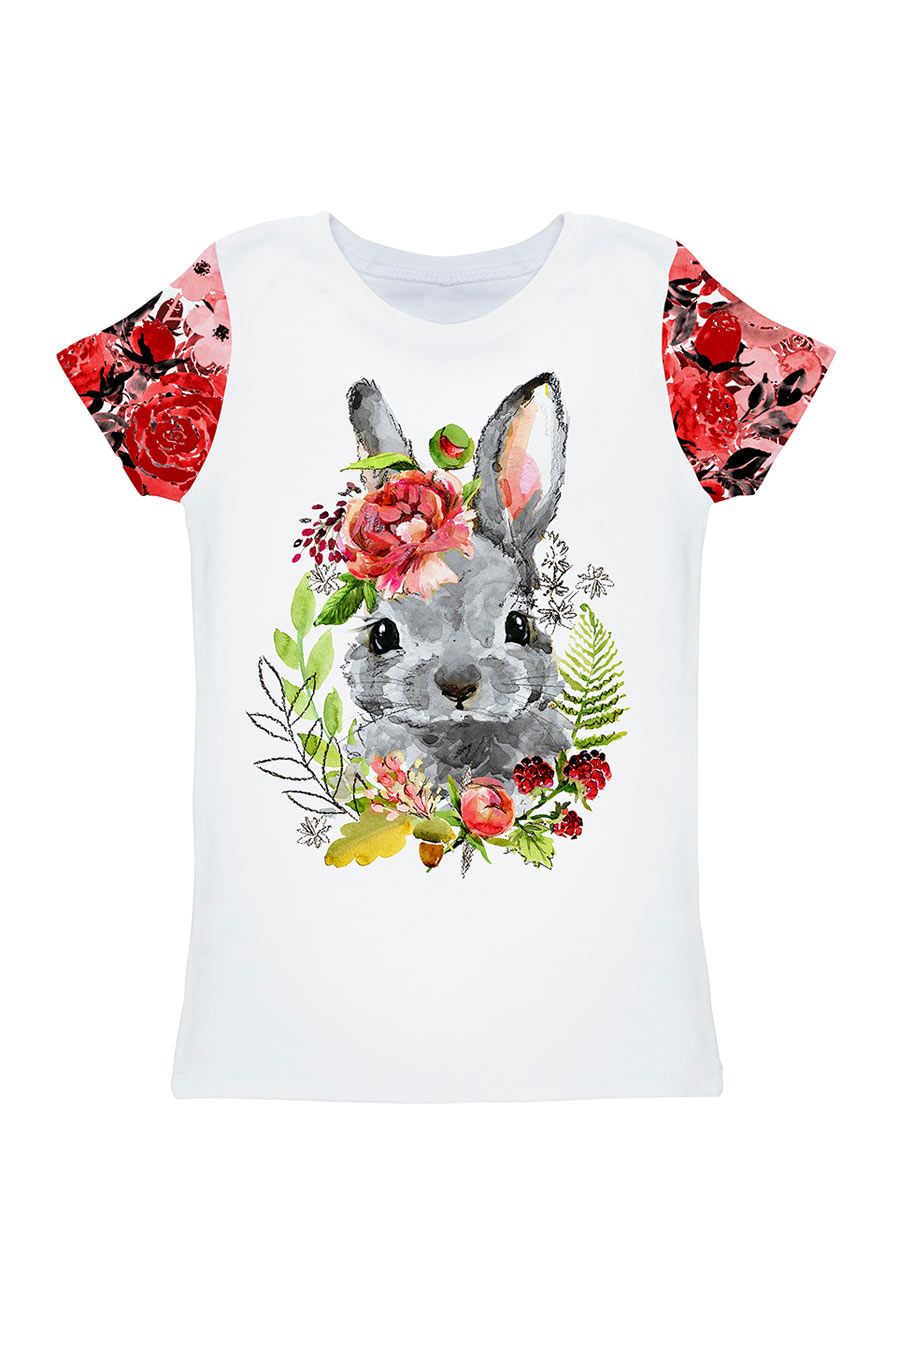 La Fleur Zoe White & Red Floral Print Cute Designer T-Shirt - Kids - Pineapple Clothing